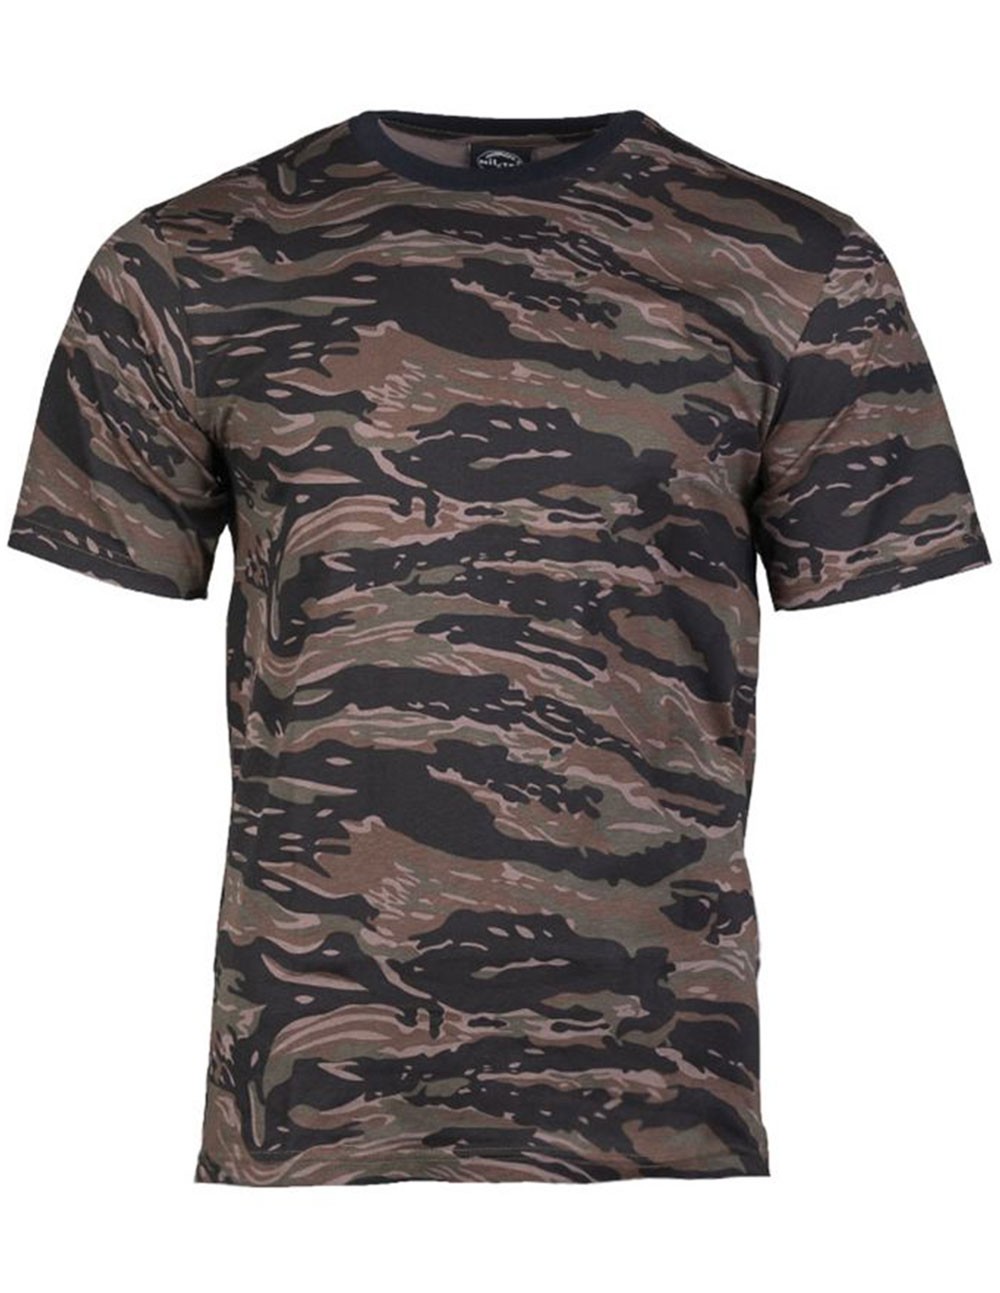 Miltec 11012022 Camouflage T-Shirt Cotton Tiger Stripe